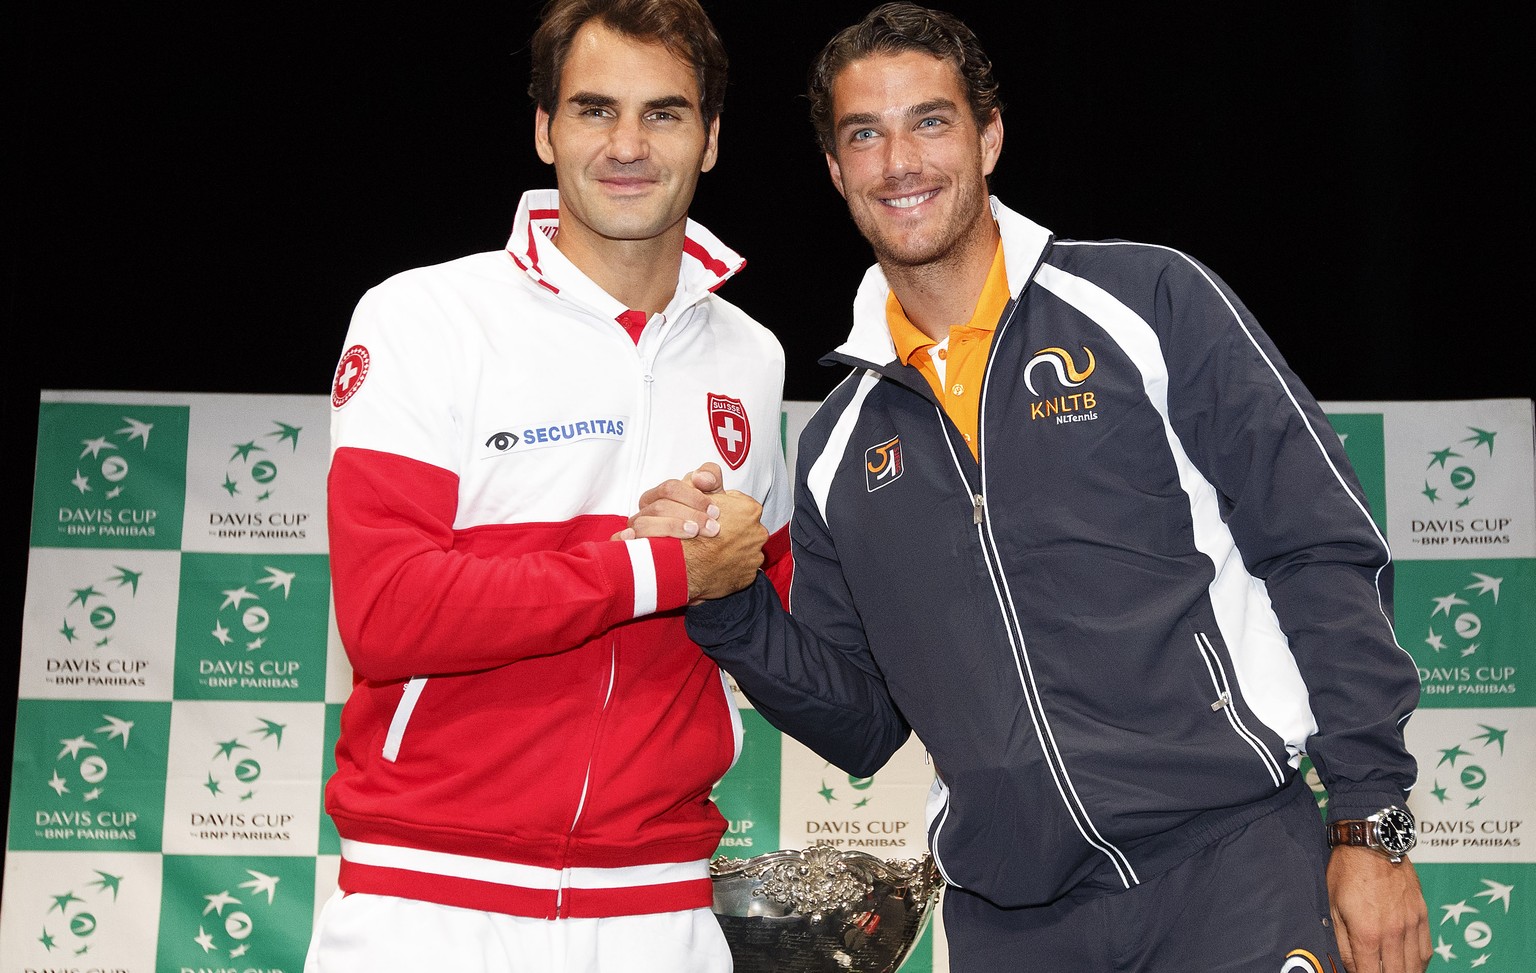 Hast du wahrscheinlich nicht gewusst: Roger Federer spielt heute gegen&nbsp;Jesse Huta Galung!&nbsp;<br data-editable="remove">